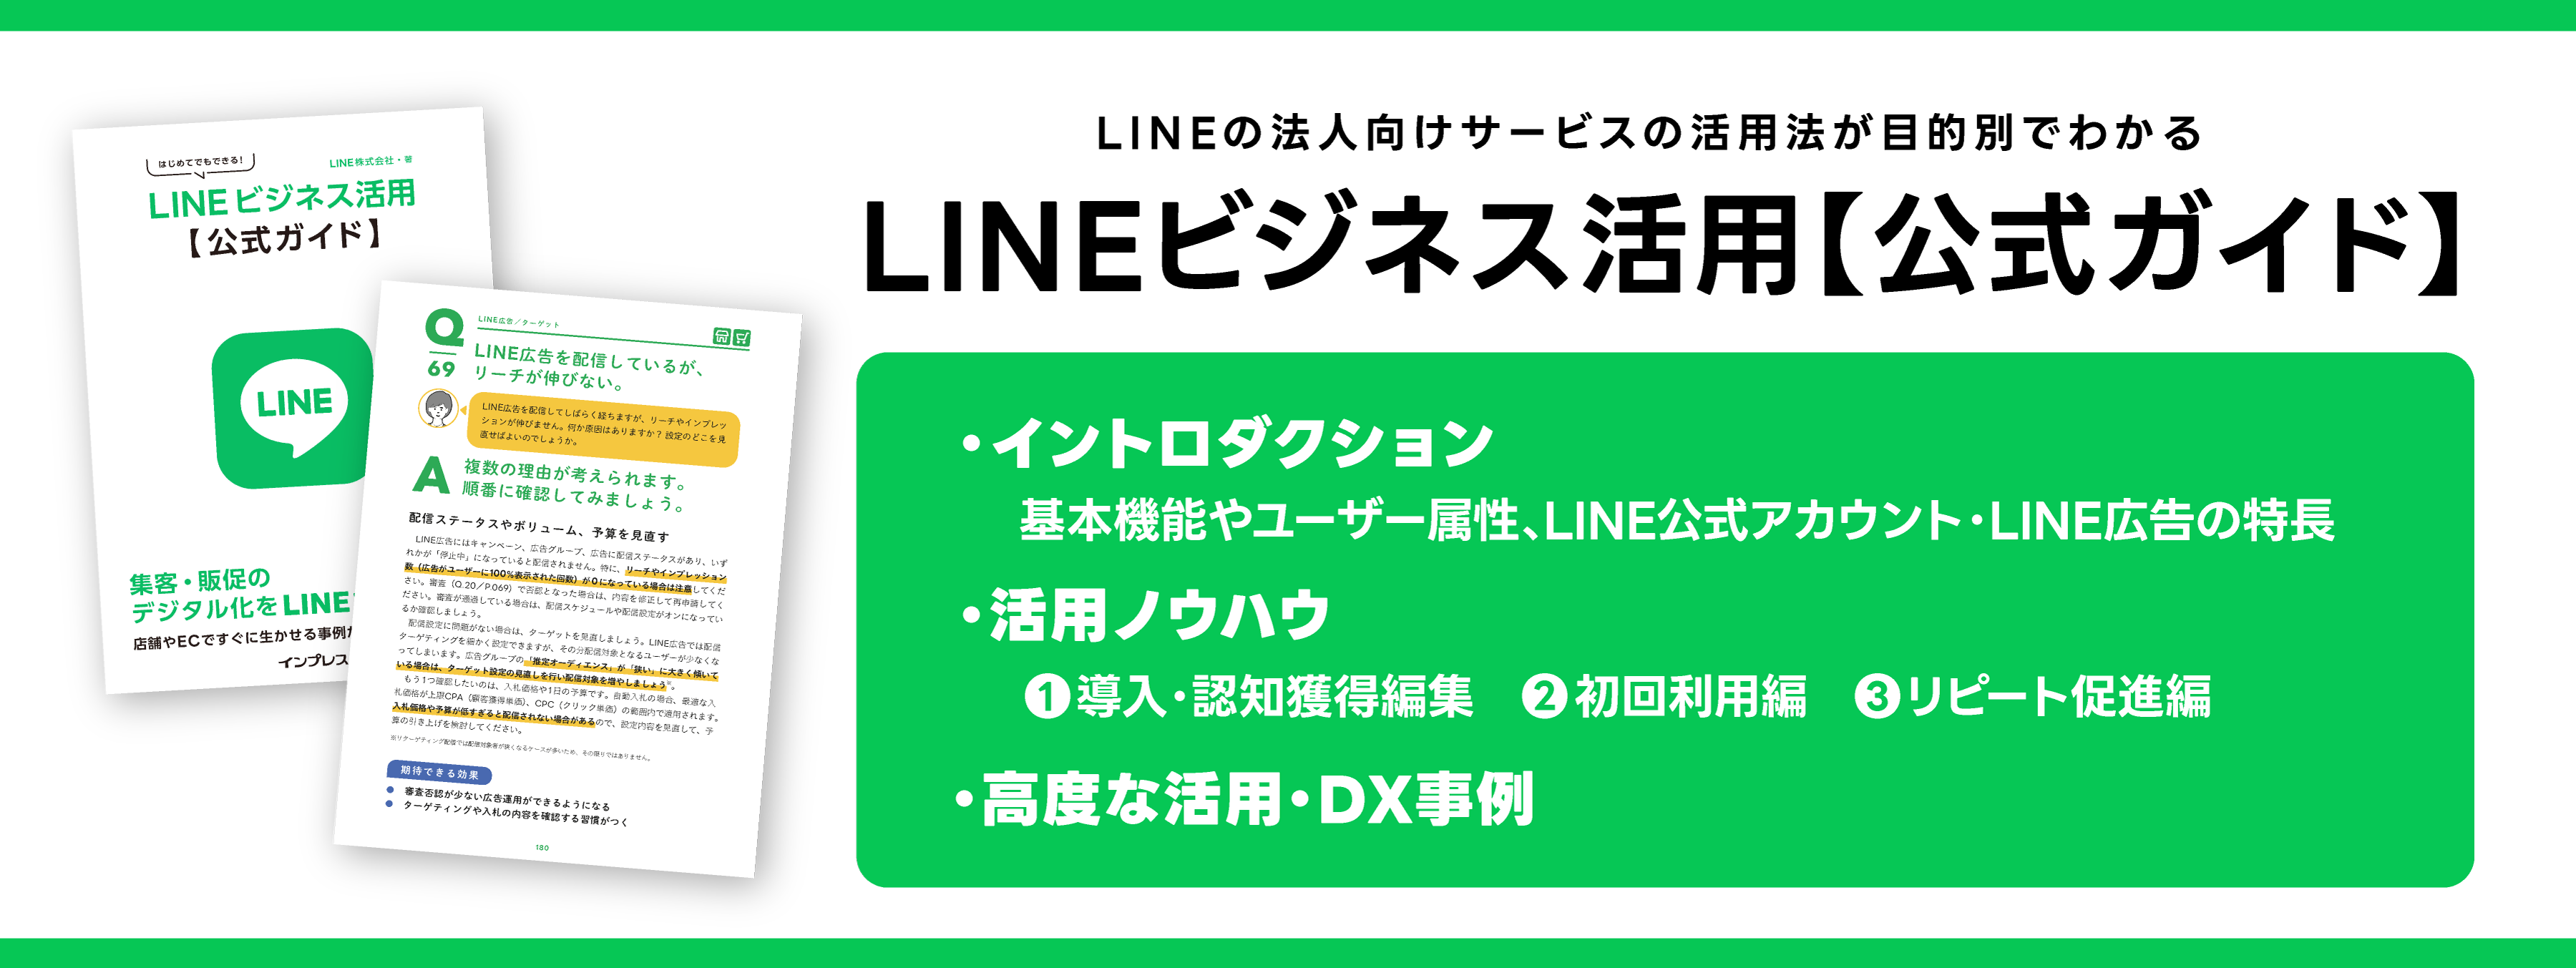 LINEビジネス活用【公式ガイド】